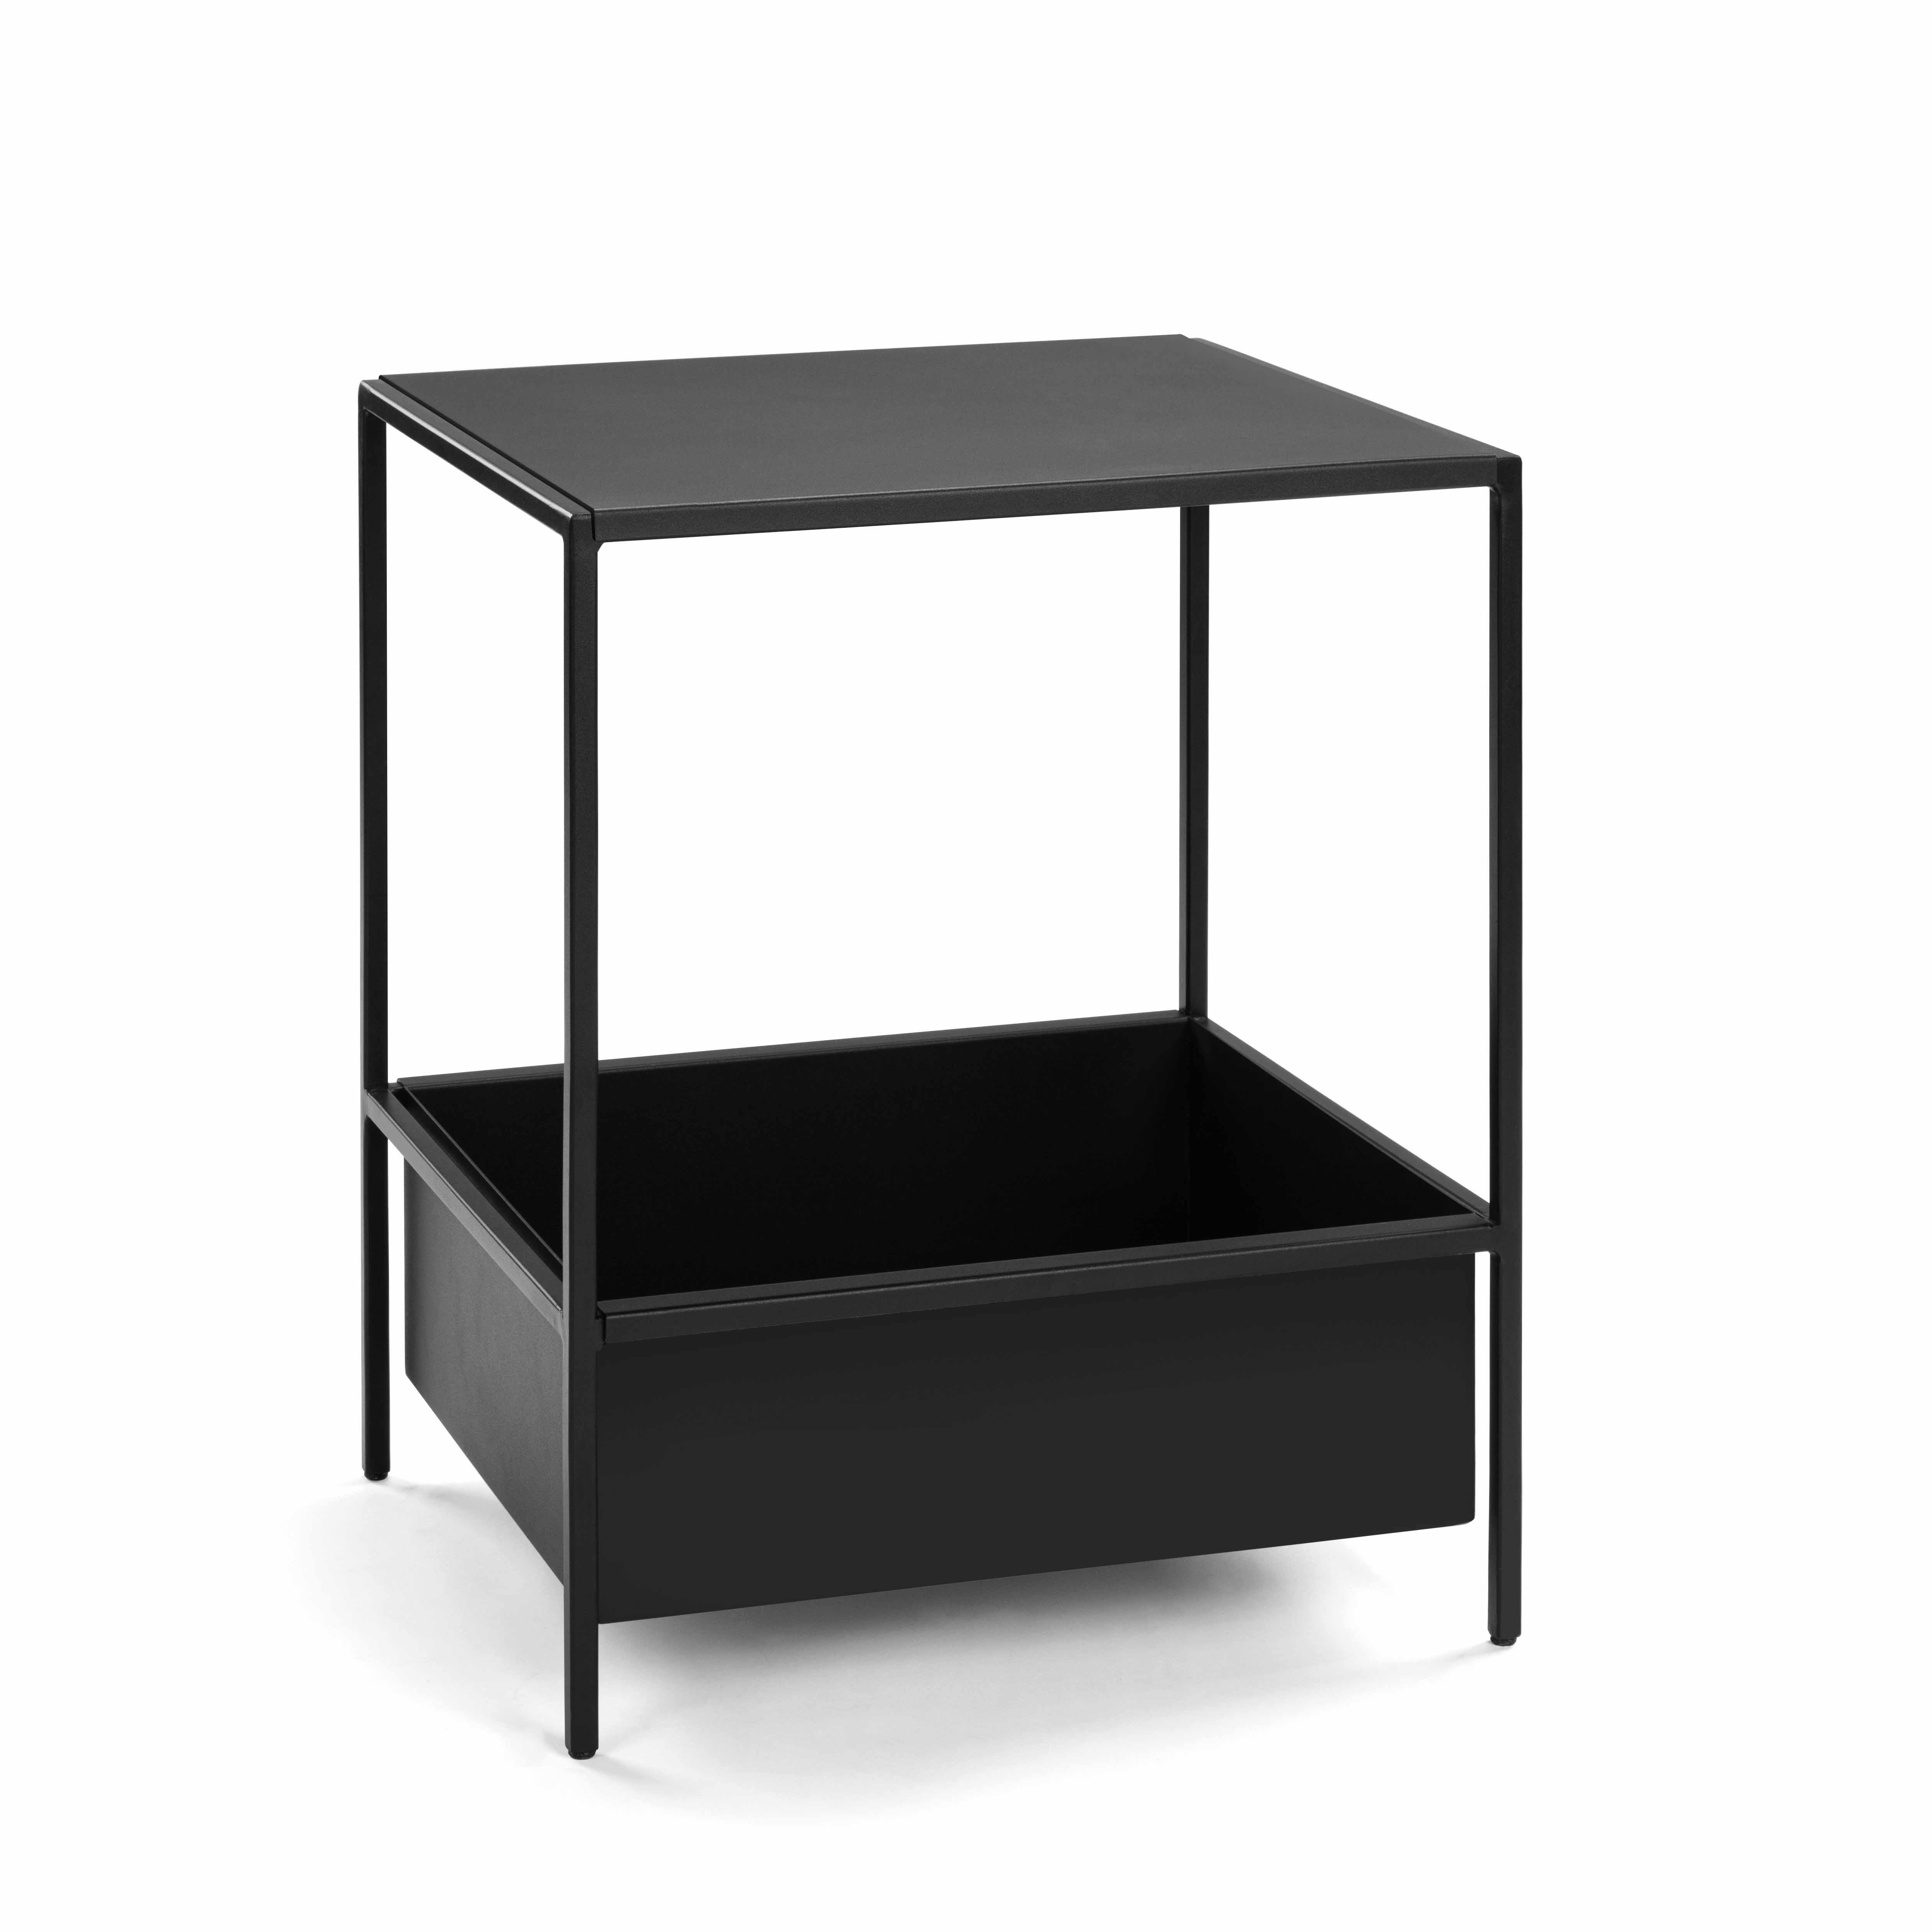 WS - Urban side table - 1x shelf, 1x planter - Black